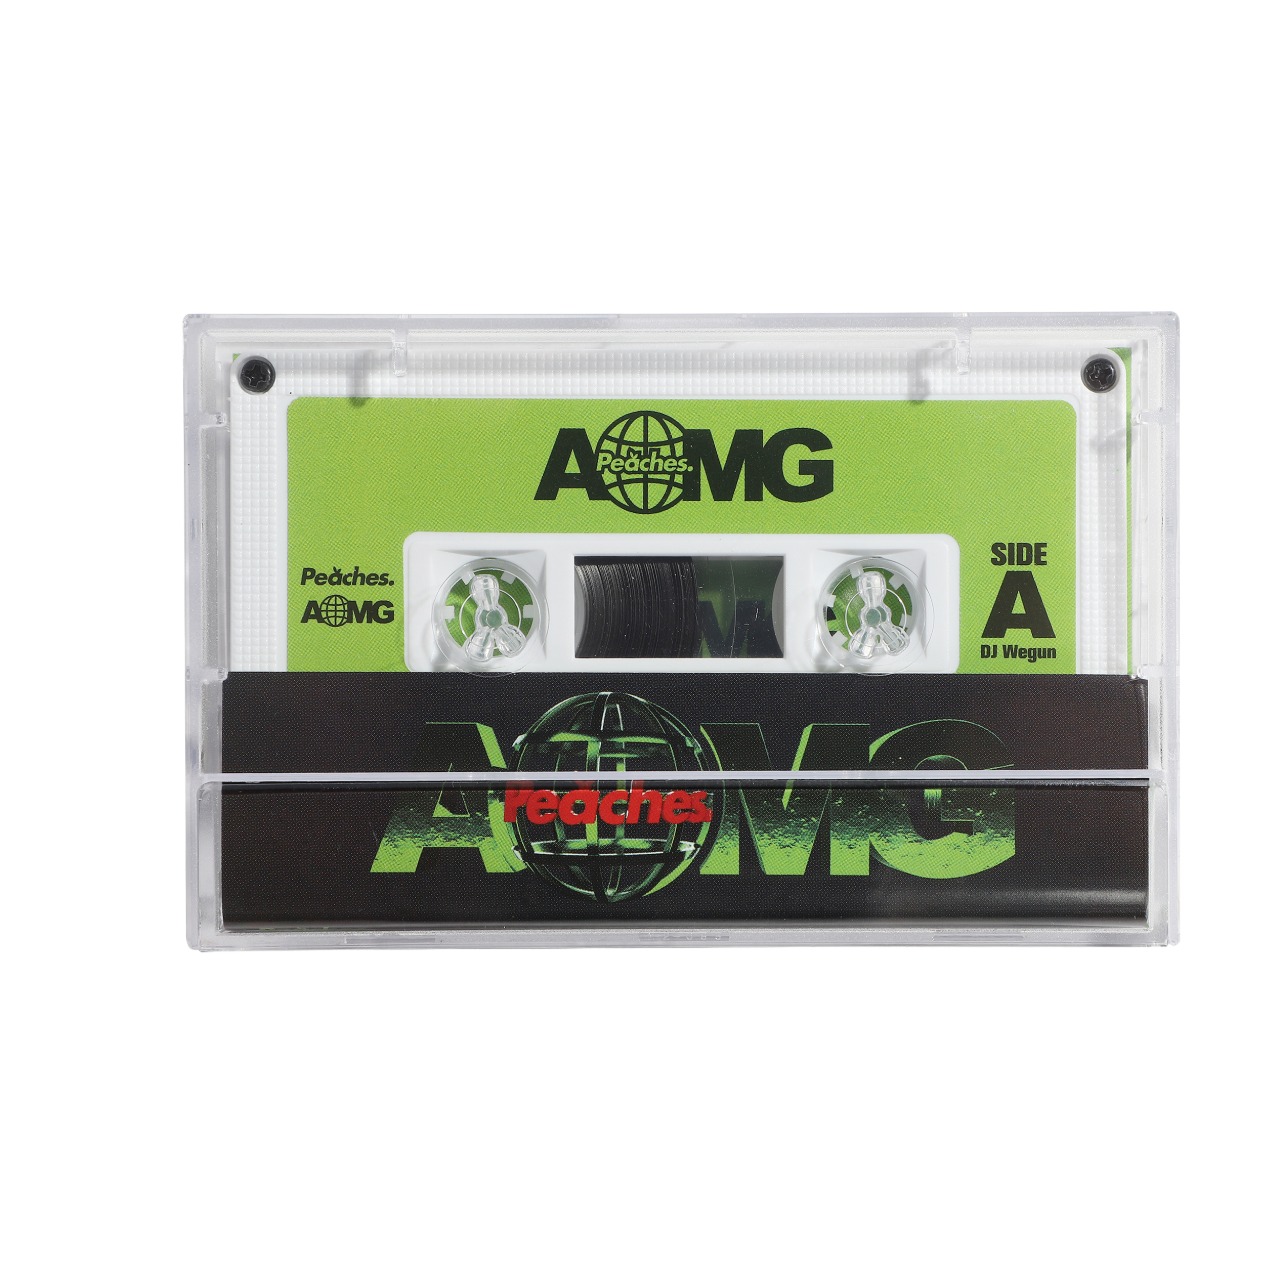 AOMG - Above Ordinary Mix 2021 Cassette Tape